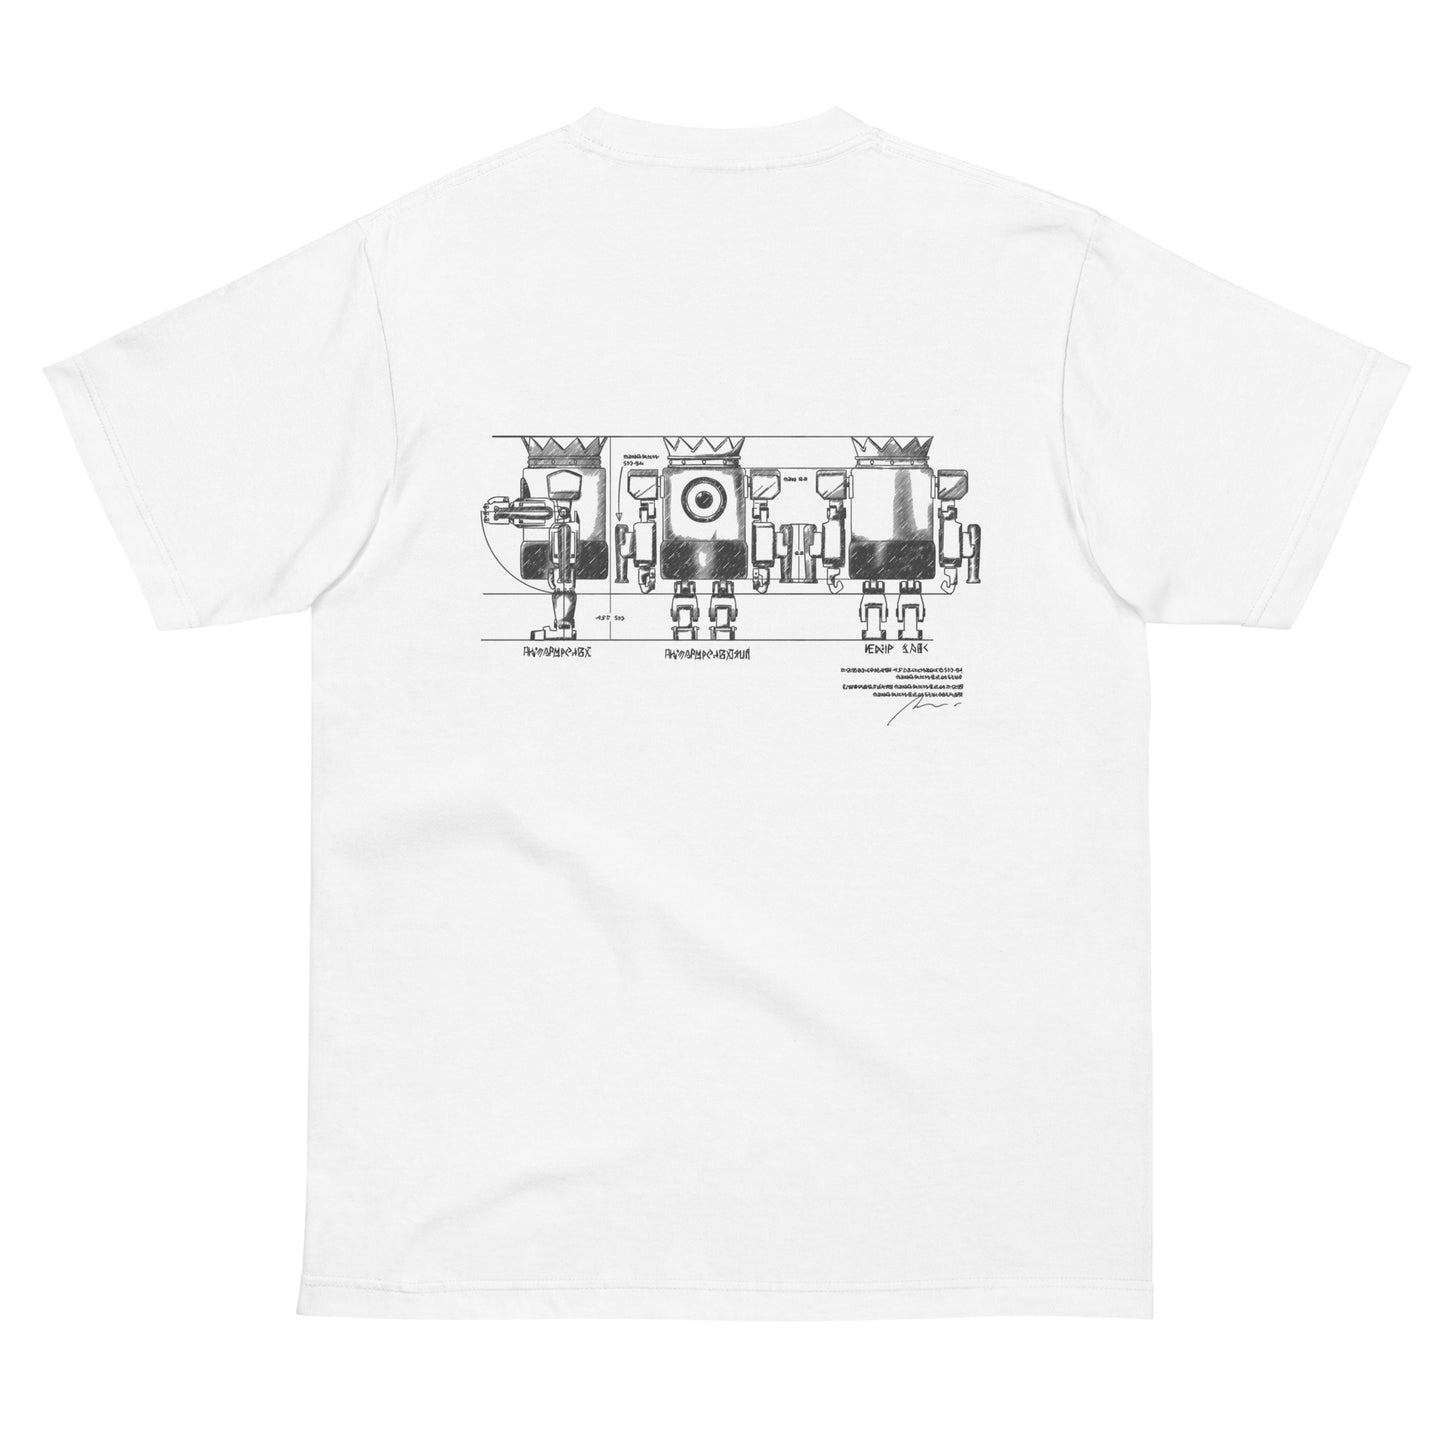 XOBOT KING 設計図Tシャツ